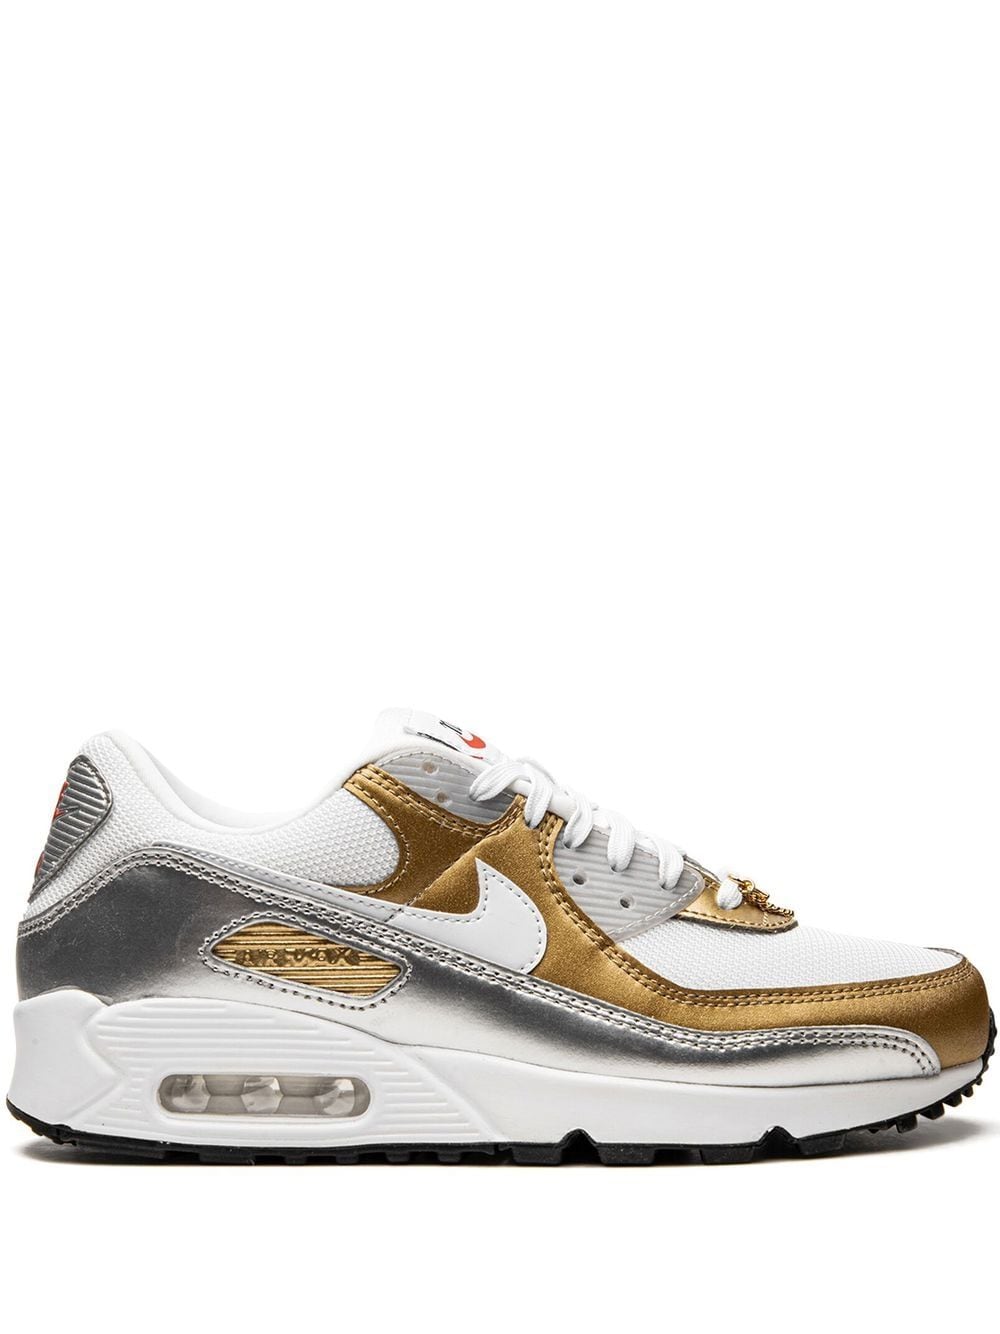 Nike Air Max 90 Se Low-top Sneakers In Gold